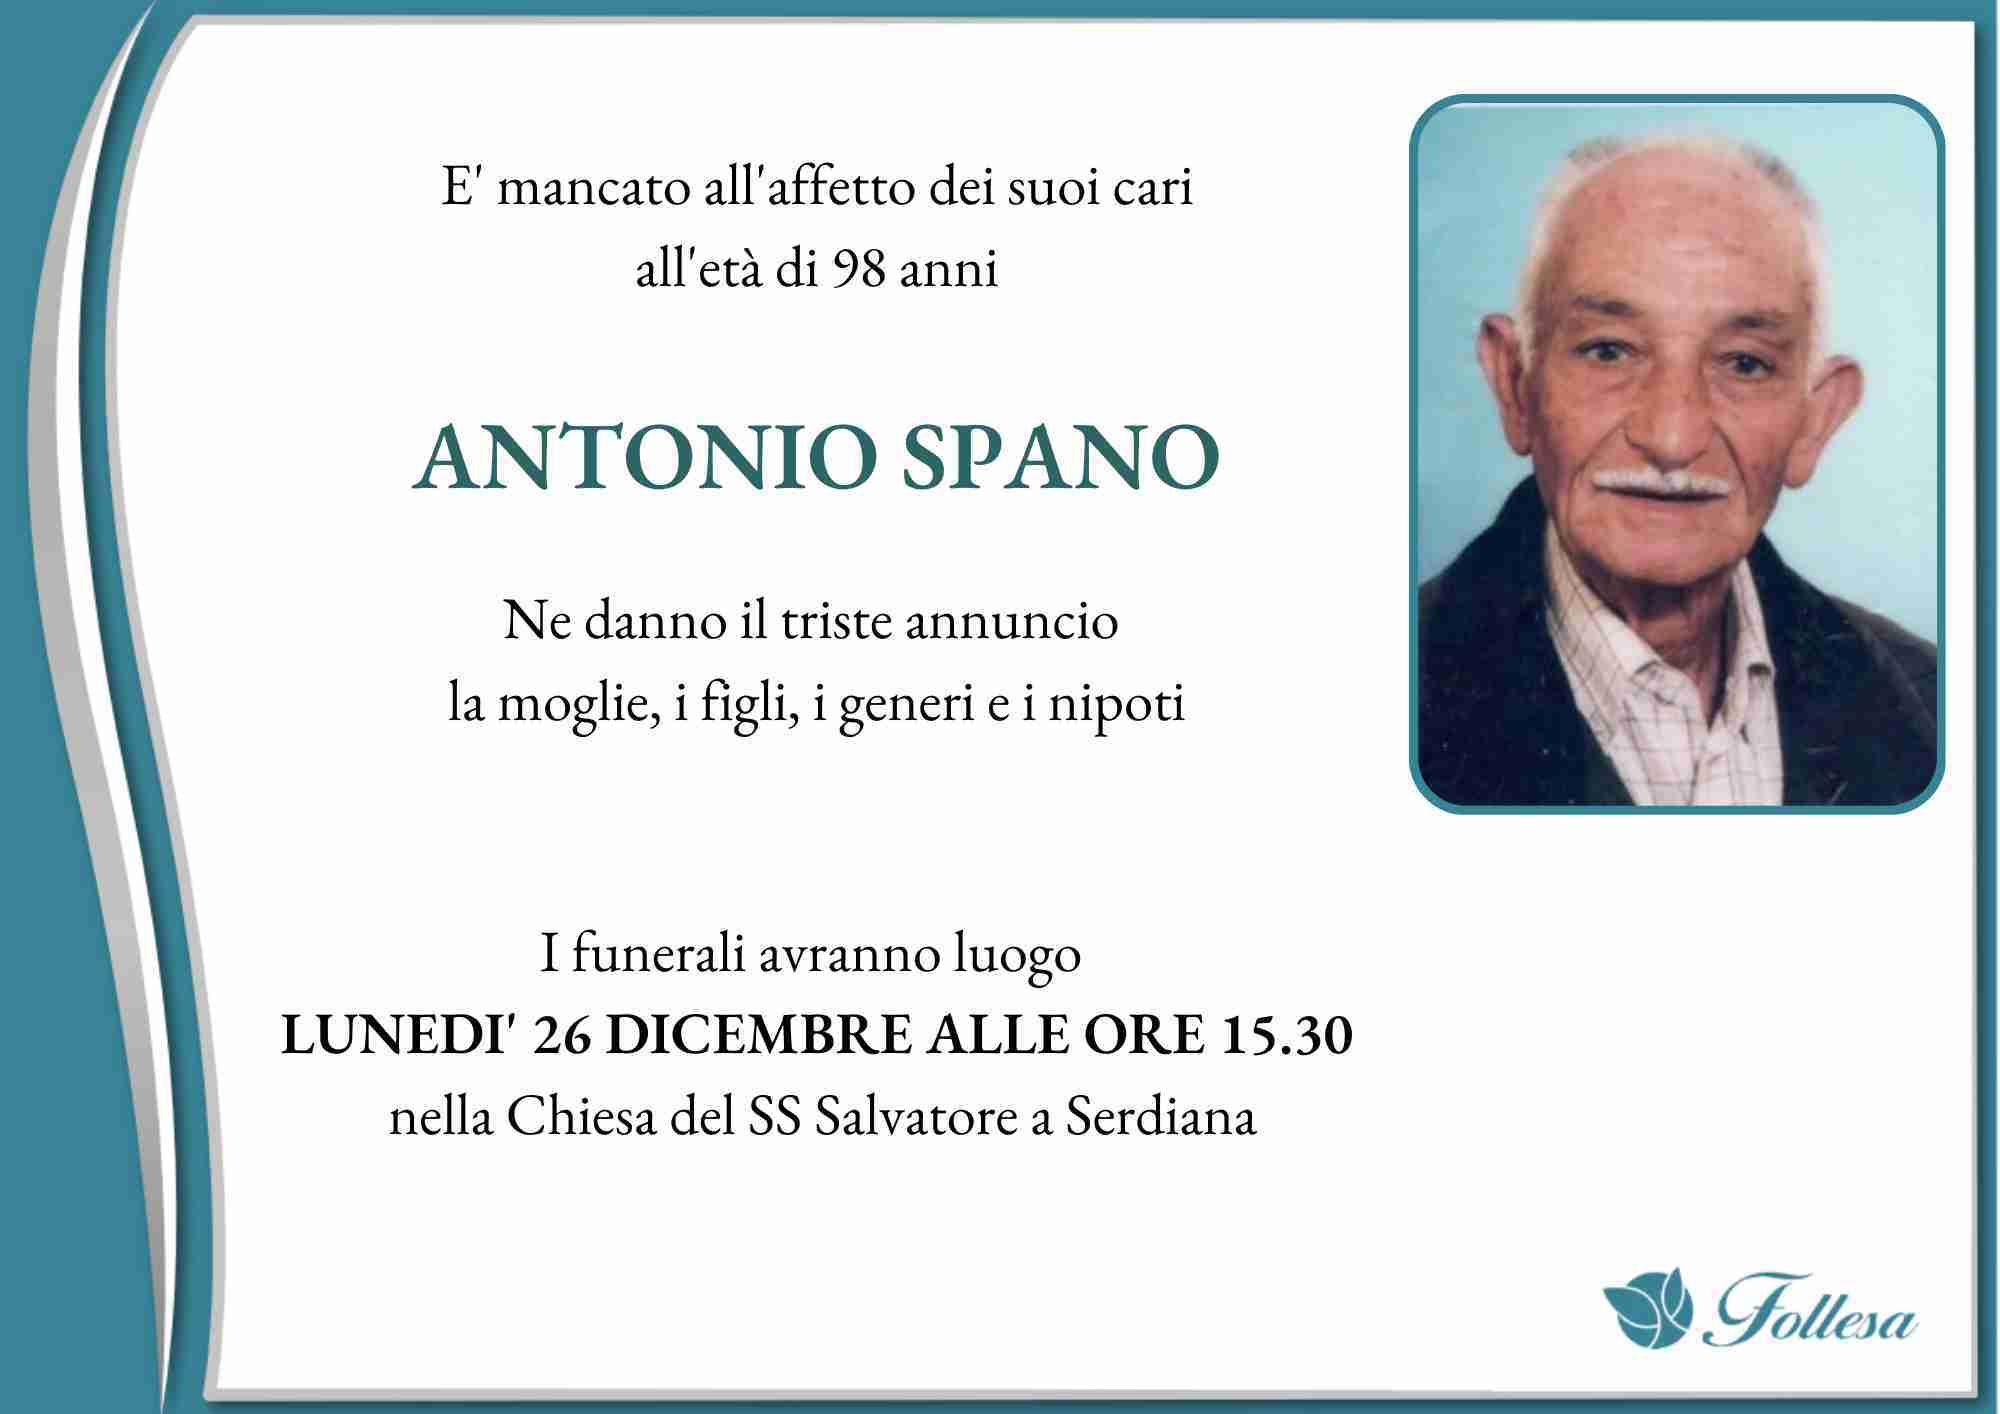 Antonio Spano